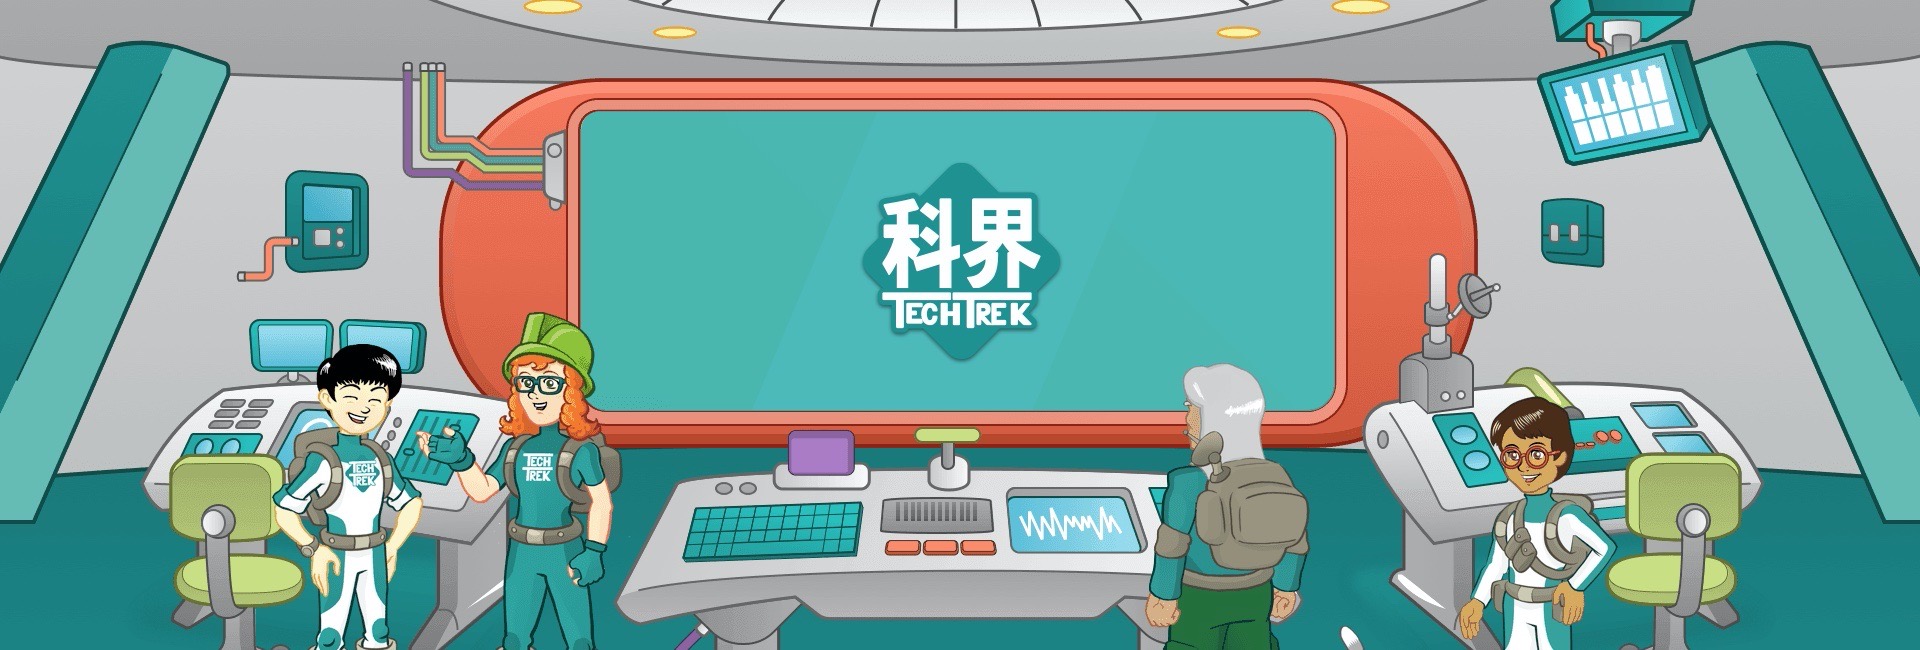 TECHTREK——基于游戏的电子学习解决方案 